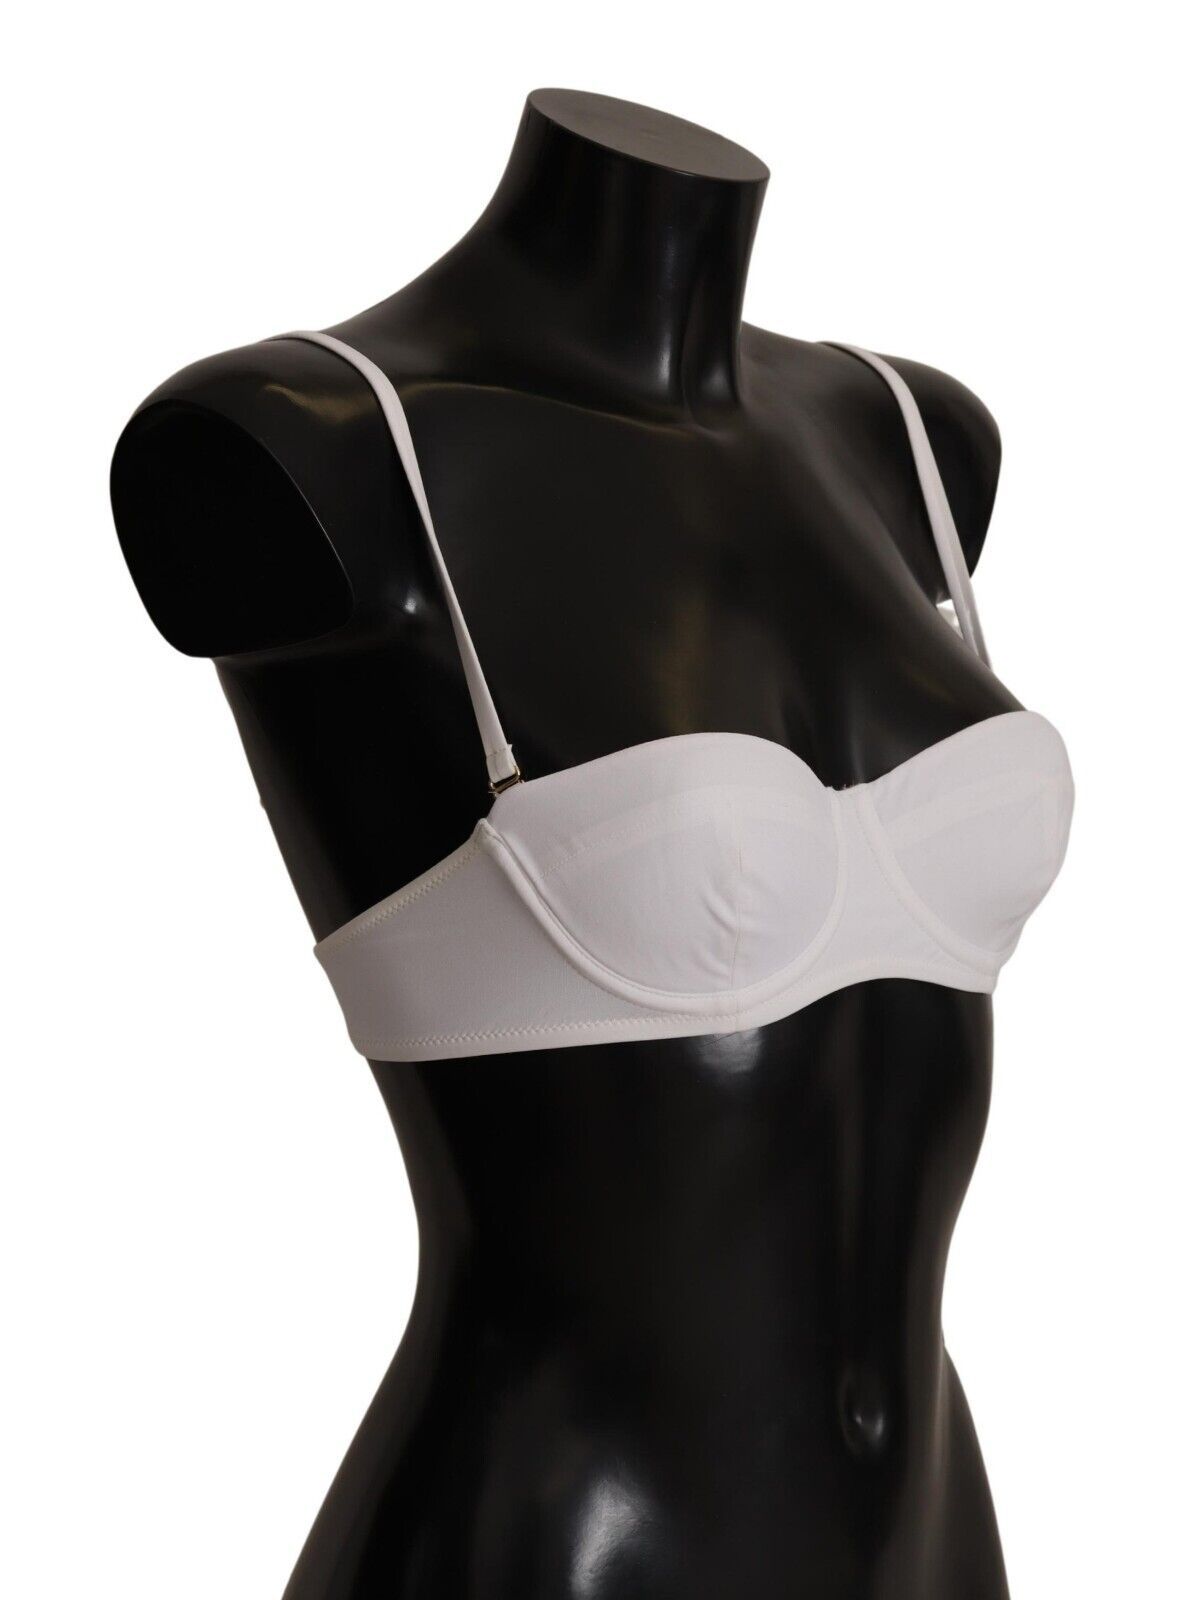 Dolce & Gabbana White Nylon Semi Pad Balconnet Bra Underwear